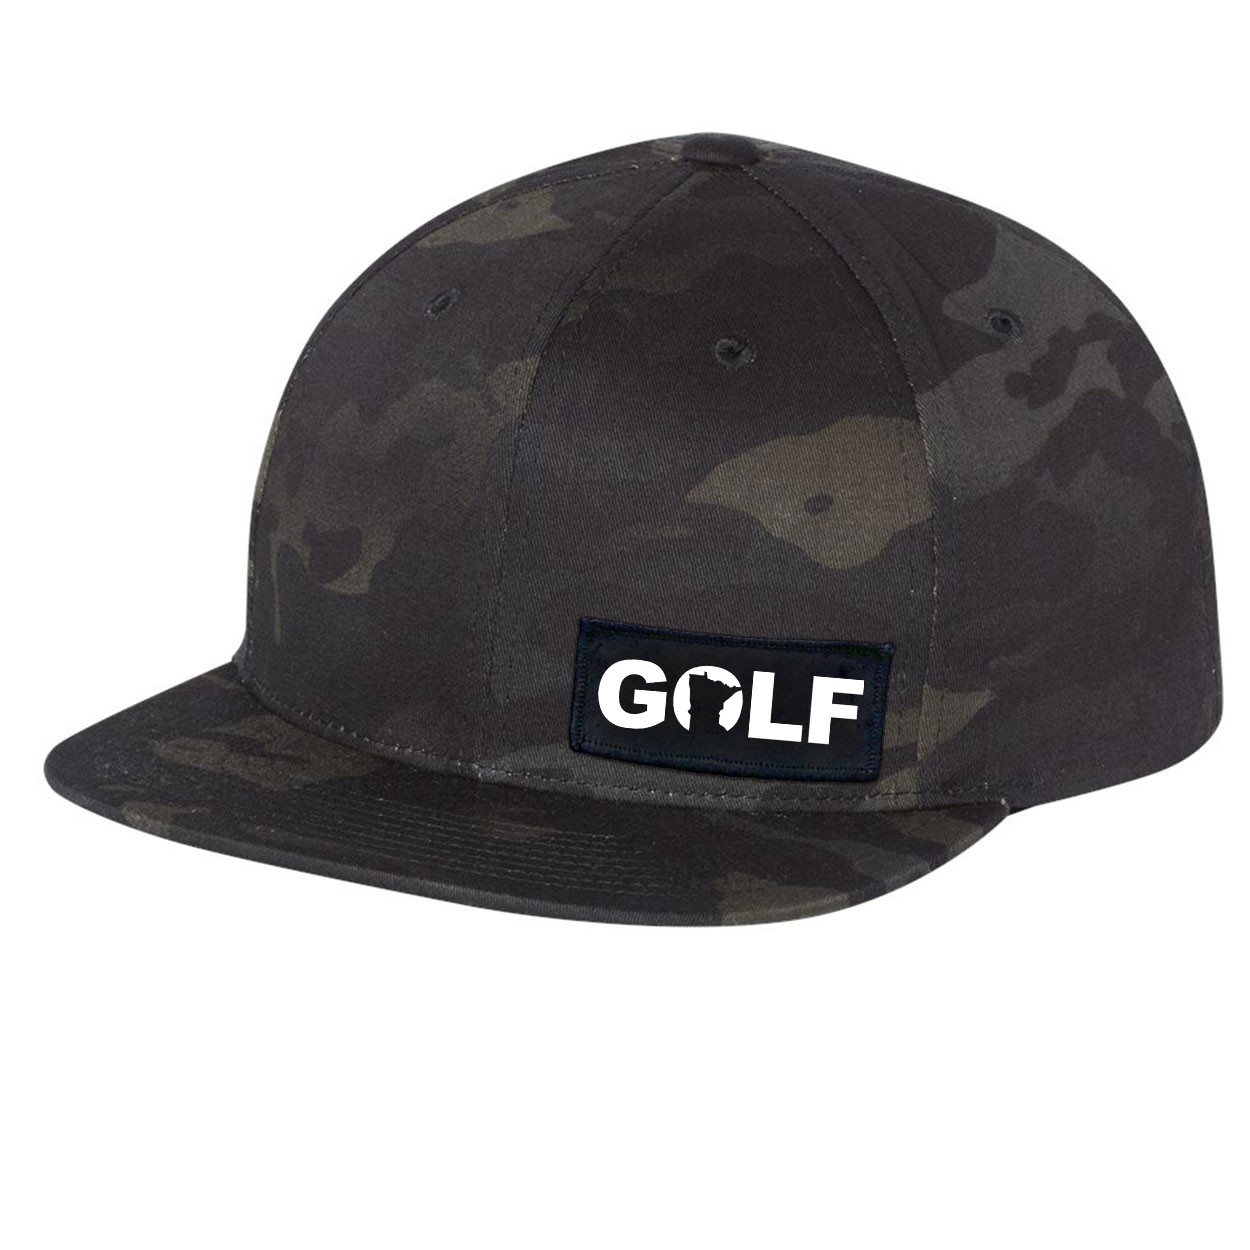 Golf Minnesota Night Out Woven Patch Flat Brim Snapback Hat Black Camo (White Logo)